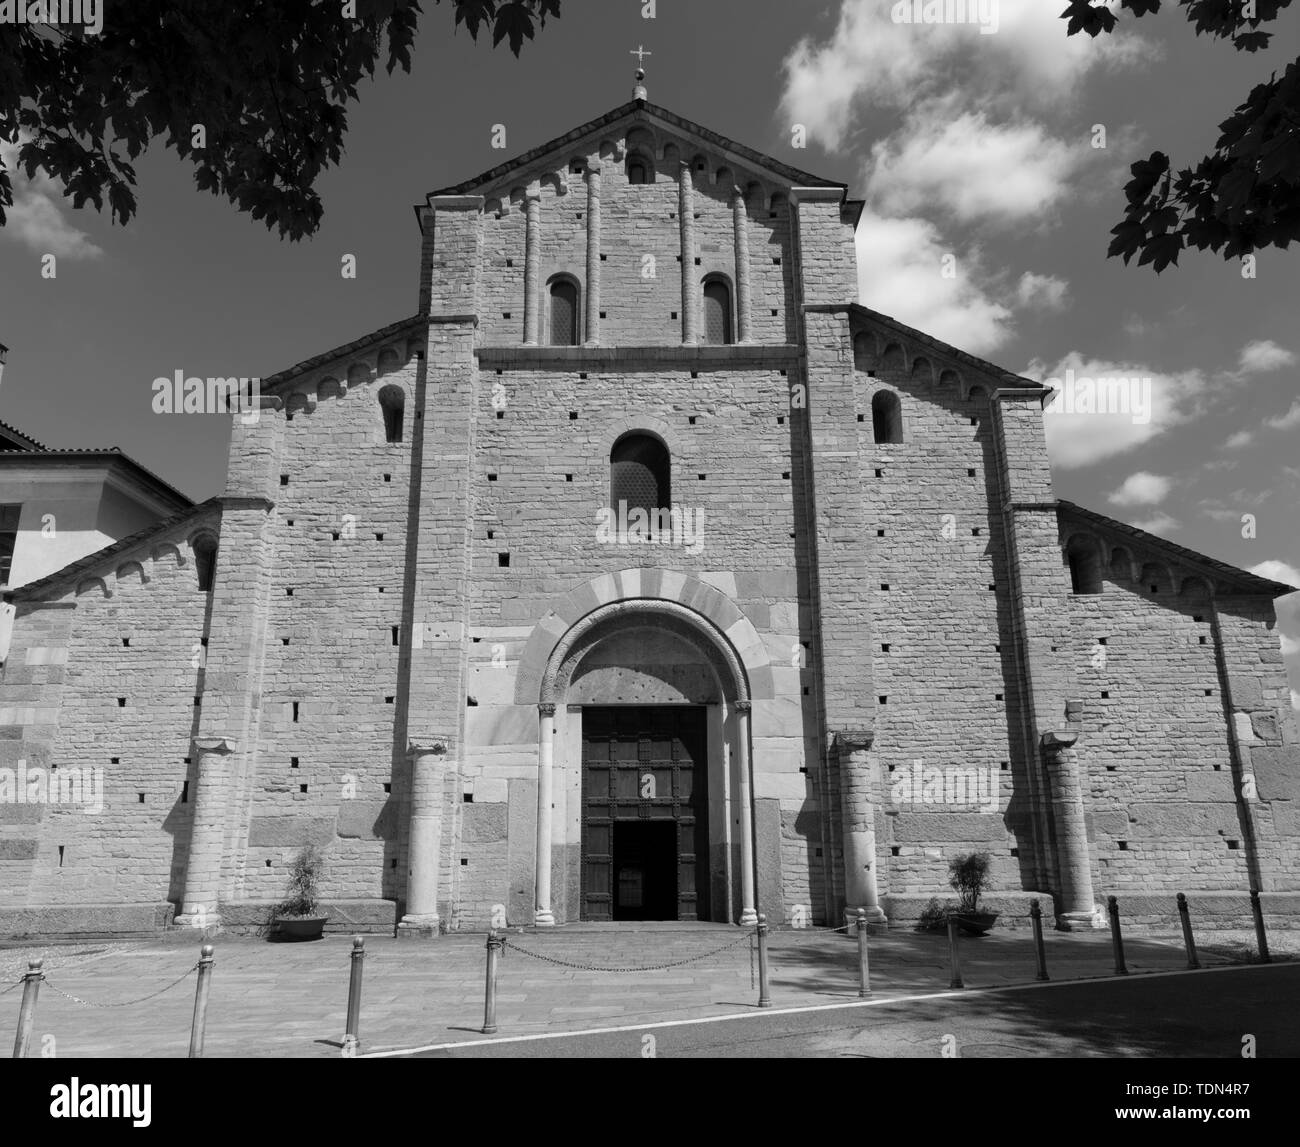 COMO, ITALIEN - 9. Mai 2015: Die facede der romanischen Kirche Basilica di San Abbondio. Stockfoto